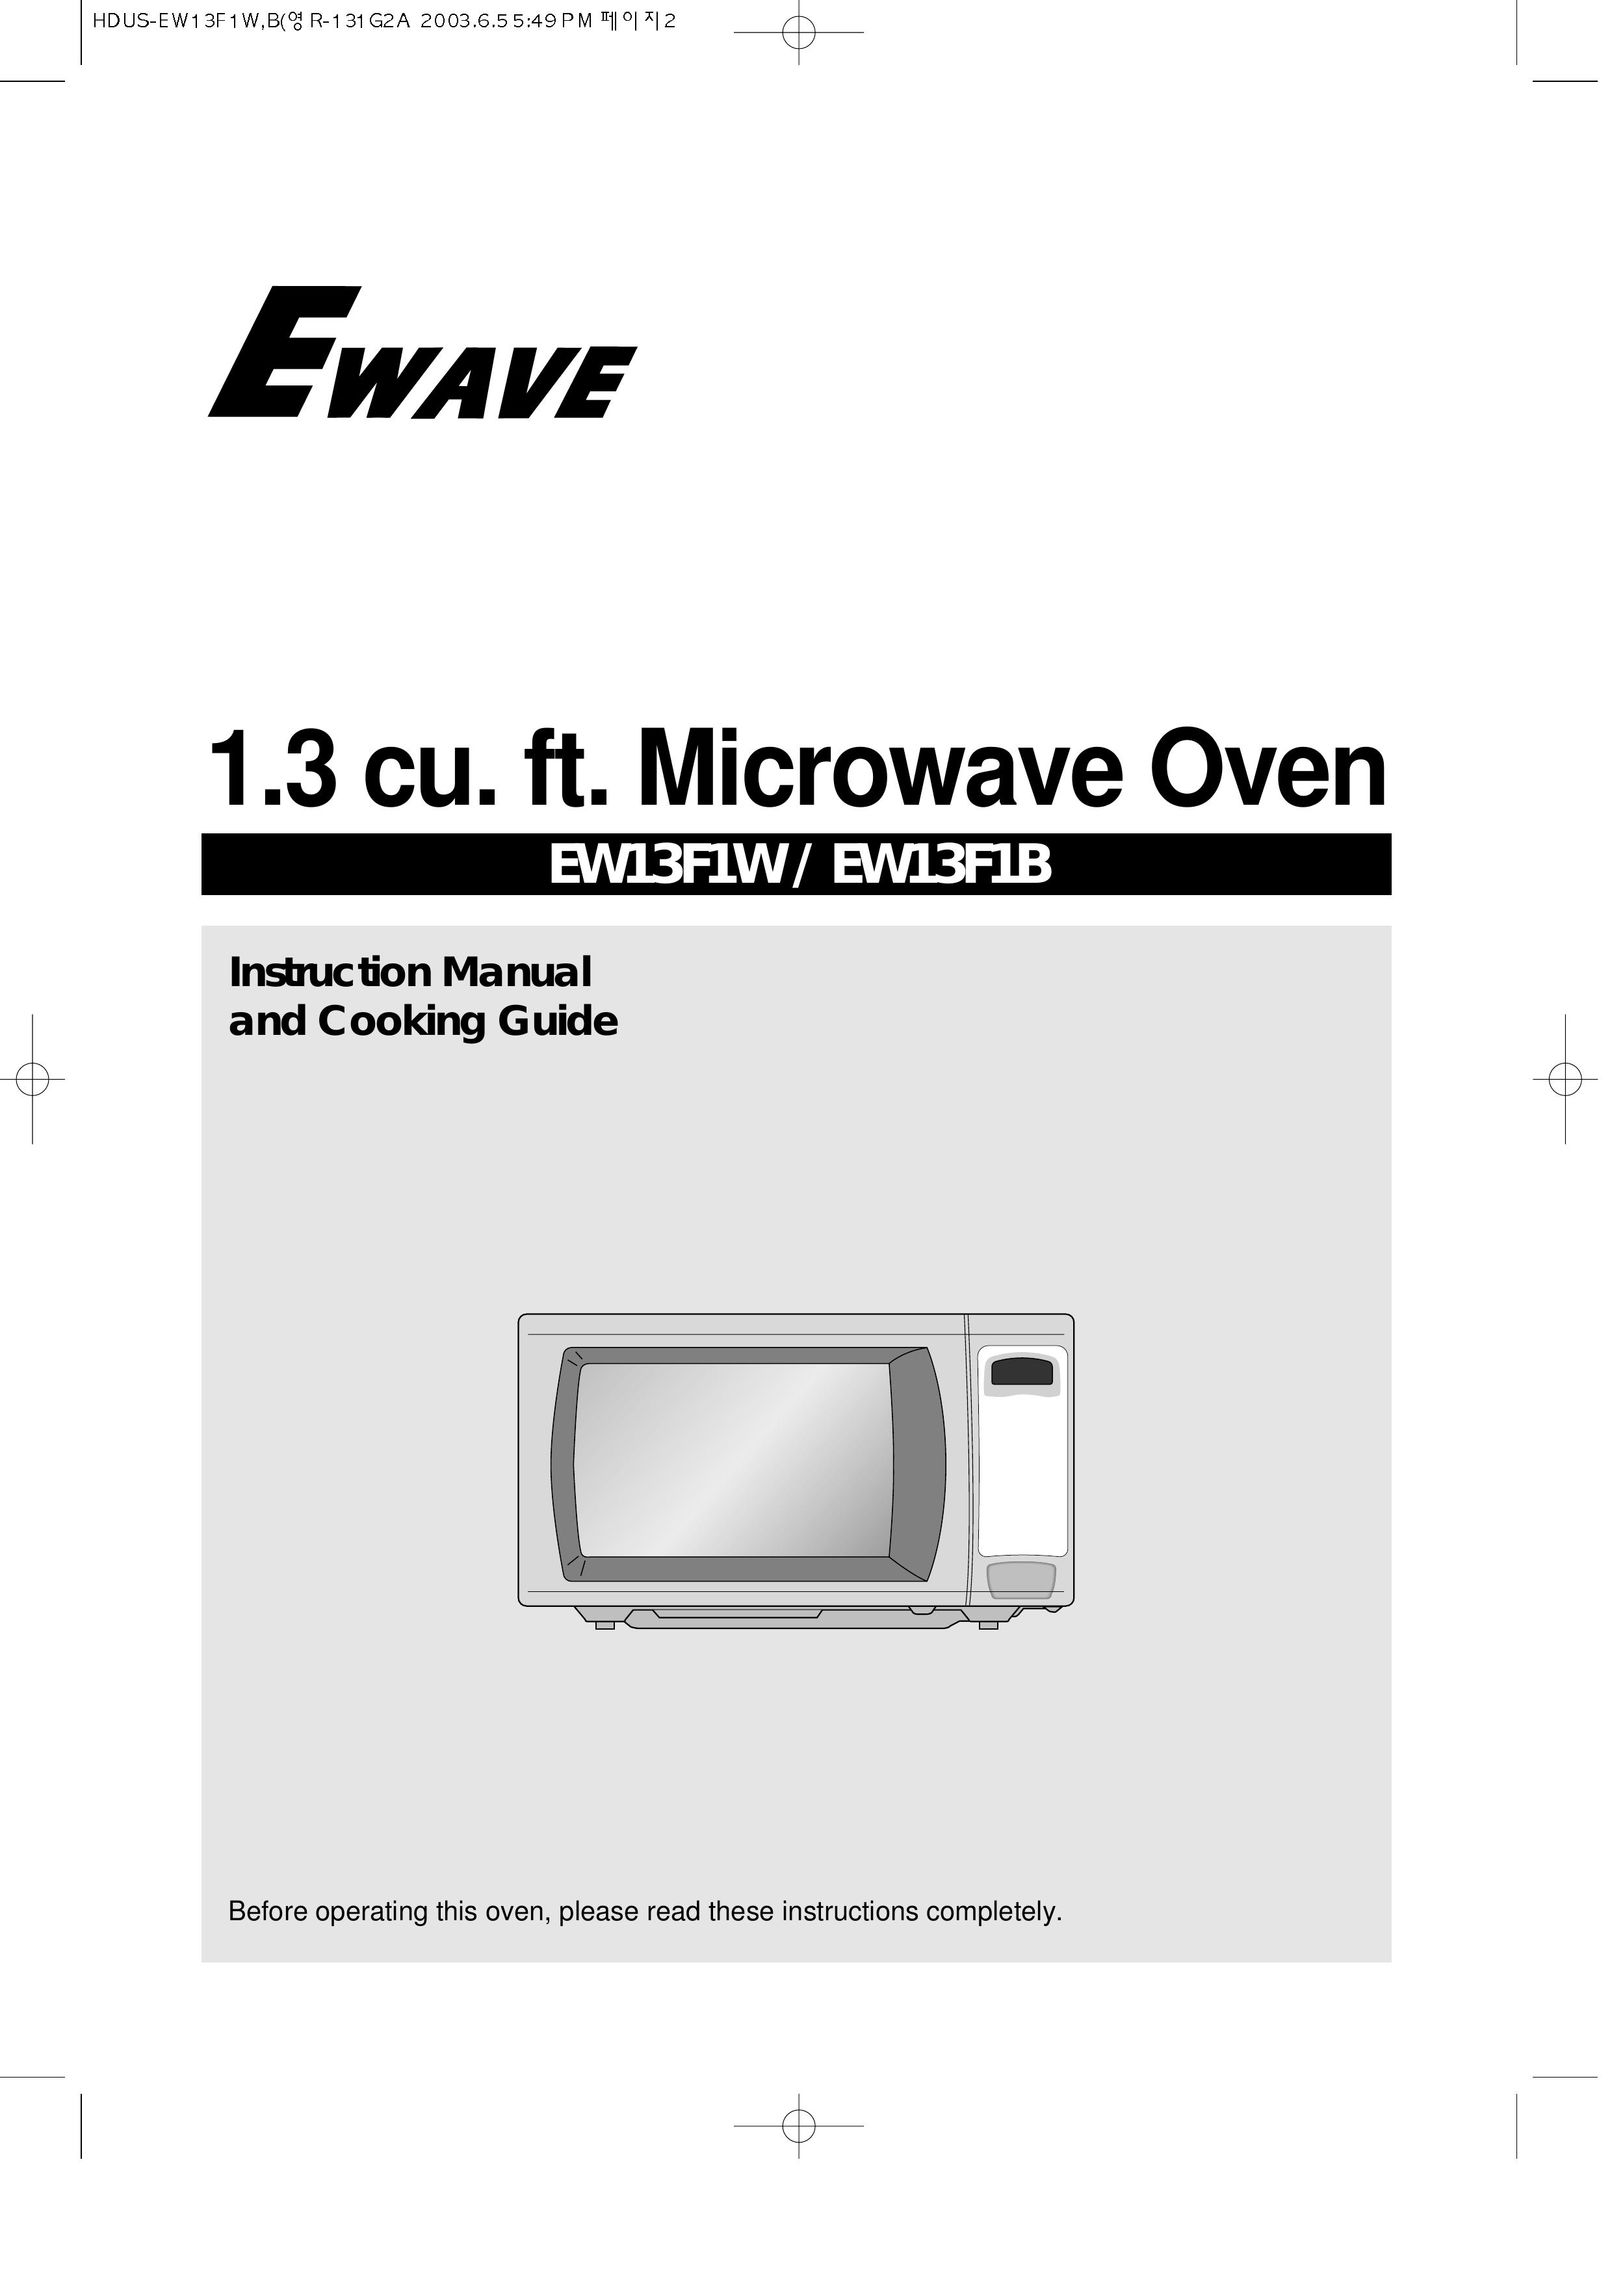 Magic Chef EW13F1W Microwave Oven User Manual